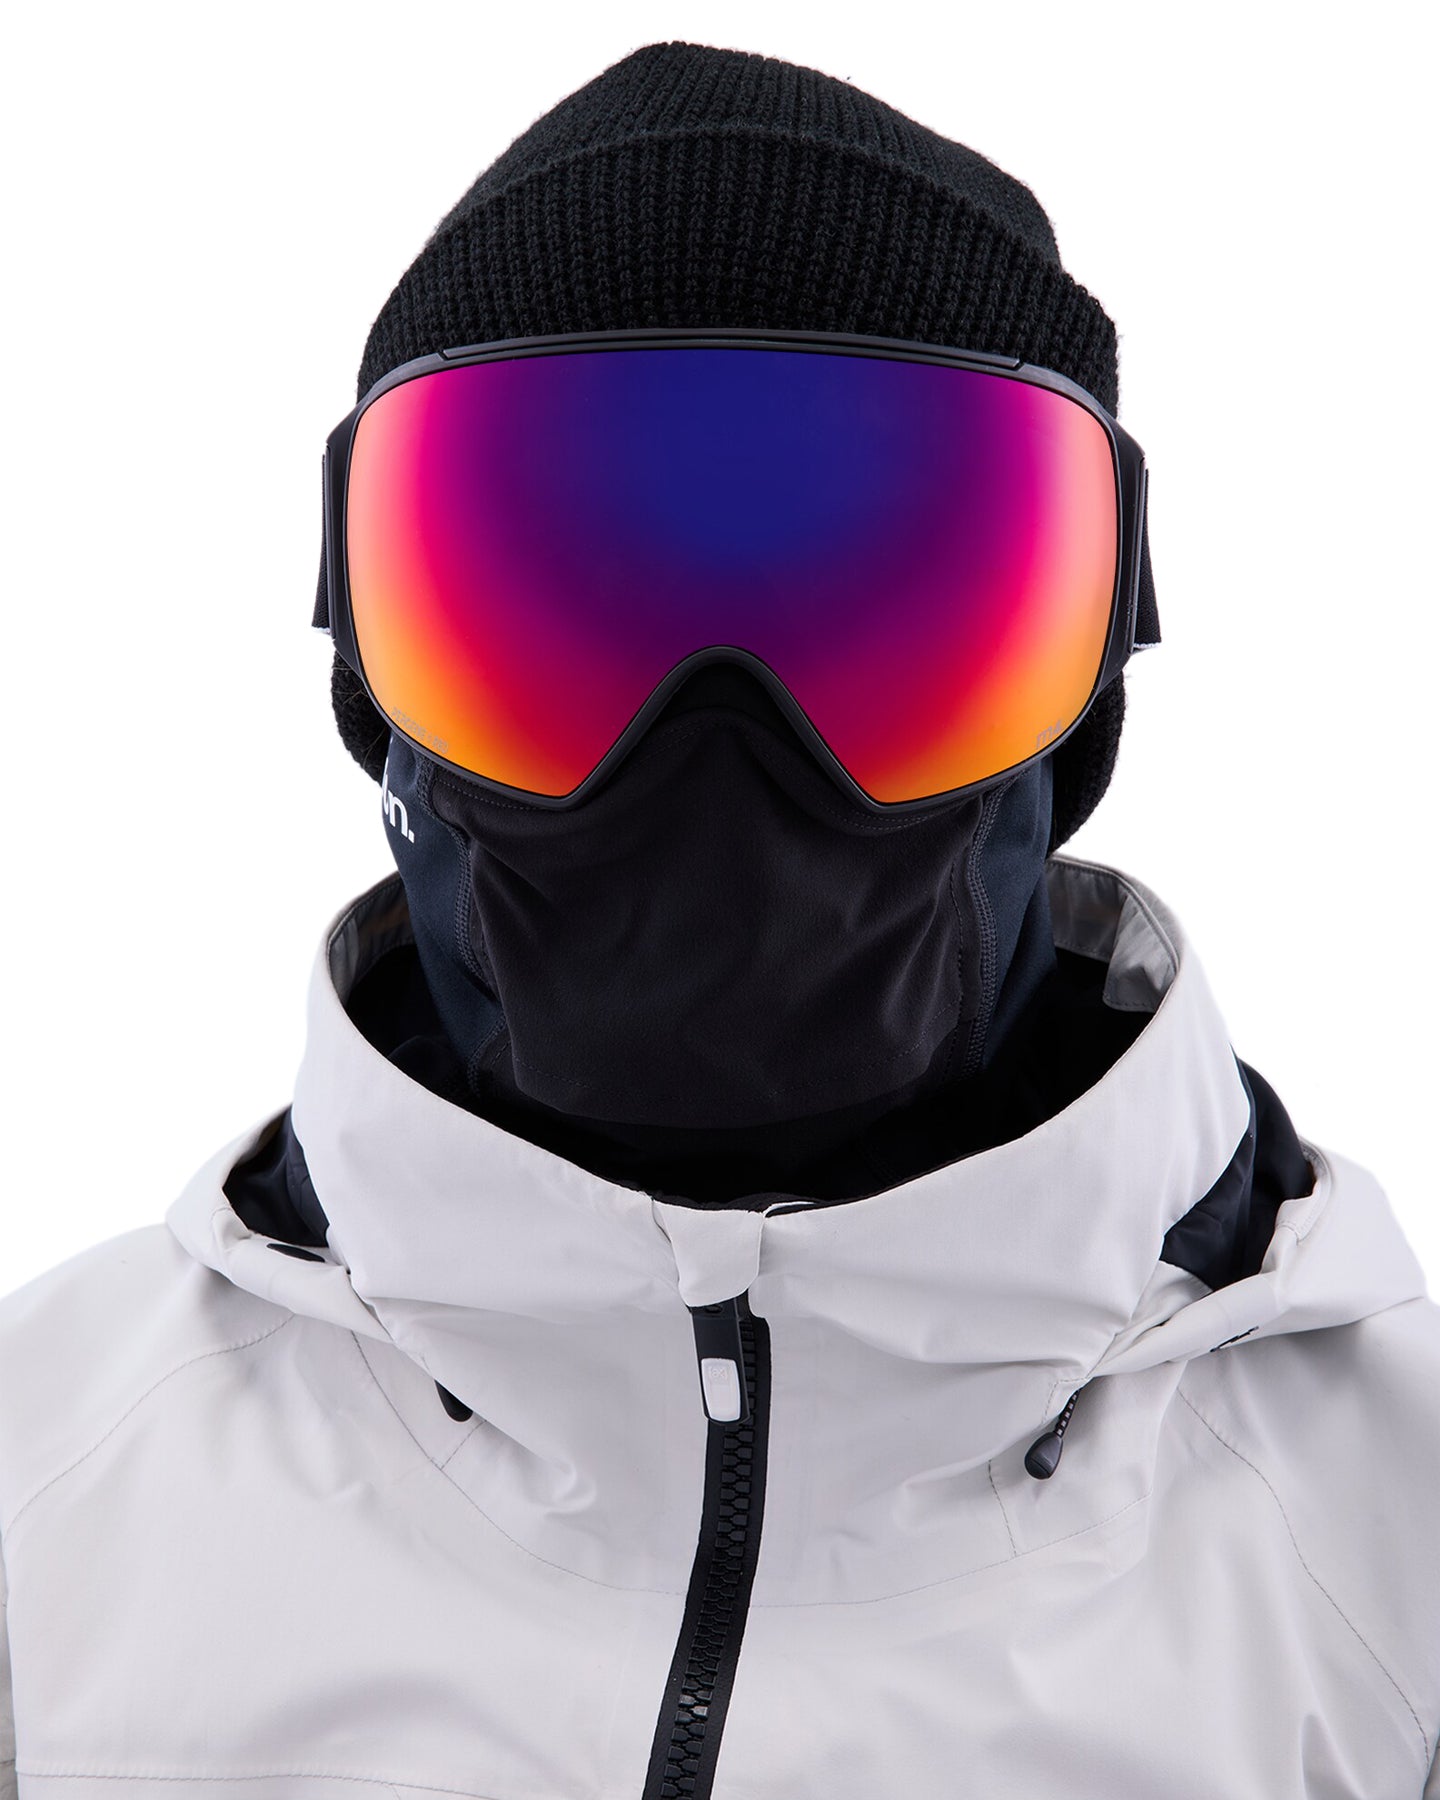 Anon M4 Toric Low Bridge Snow Goggles + Bonus Lens + Mfi® Face Mask - Black/Perceive Sunny Red Lens Men's Snow Goggles - Trojan Wake Ski Snow